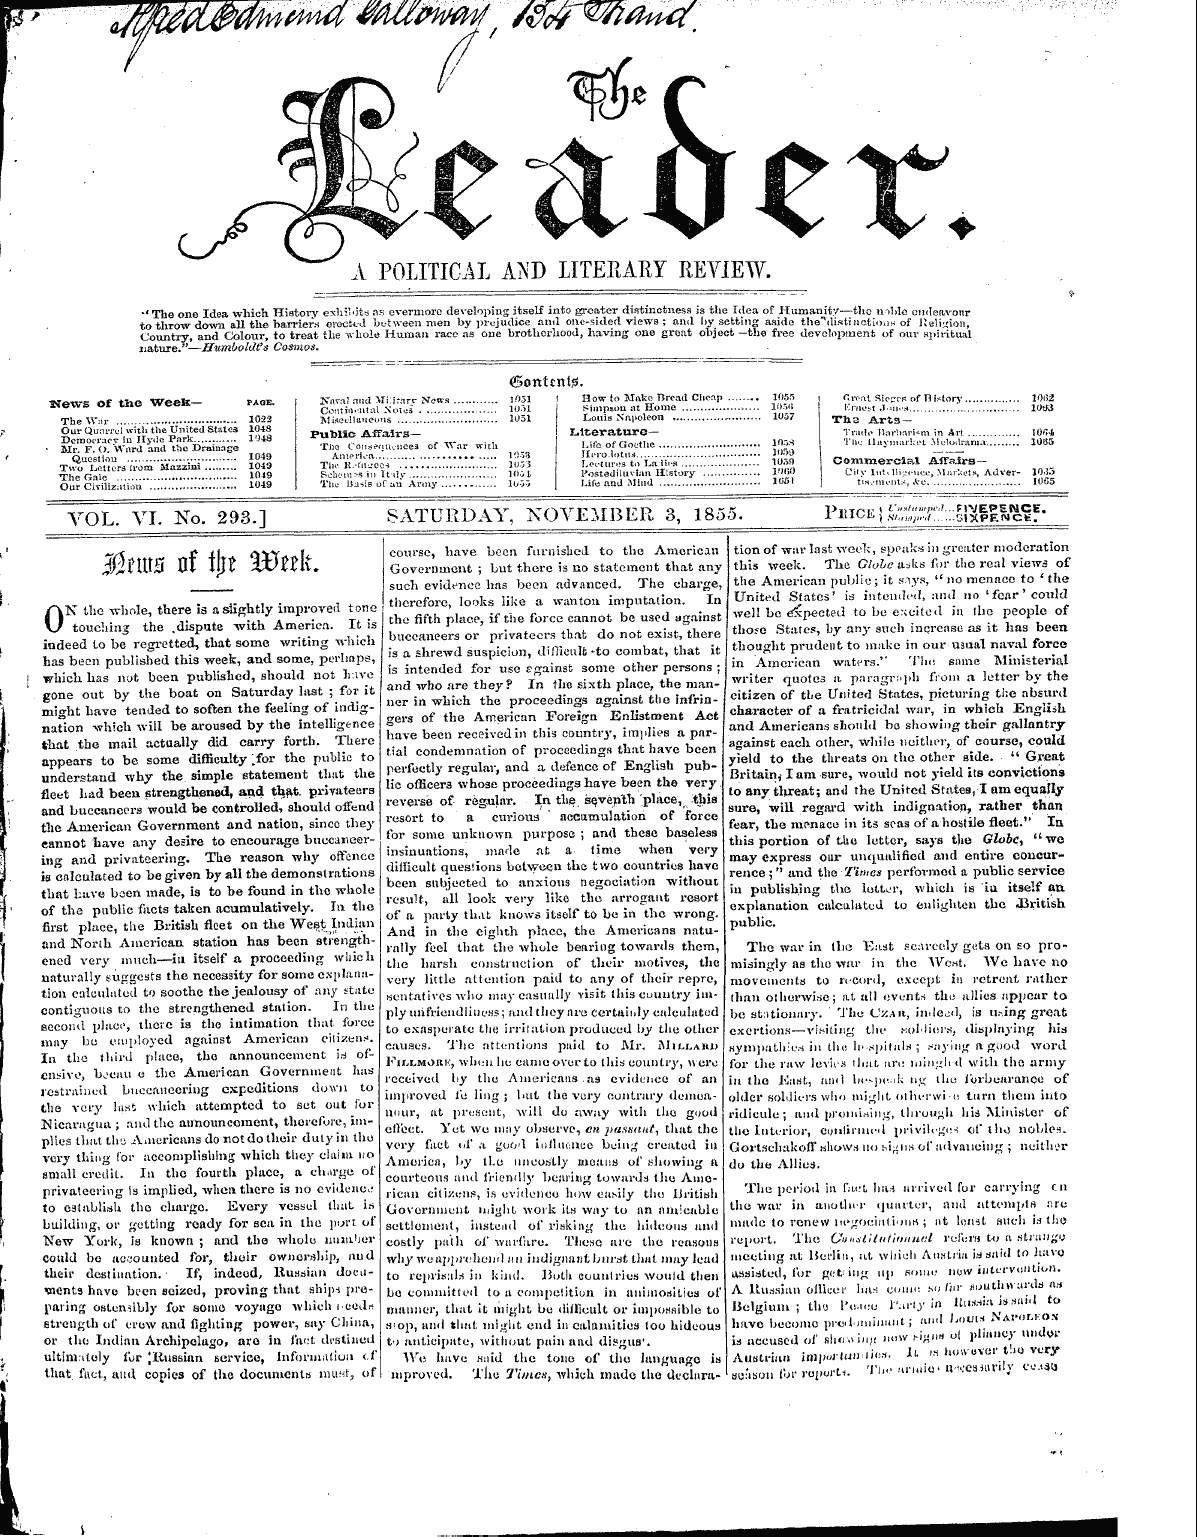 Leader (1850-1860): jS F Y, 1st edition - Mtm Nf W)T Wnk.